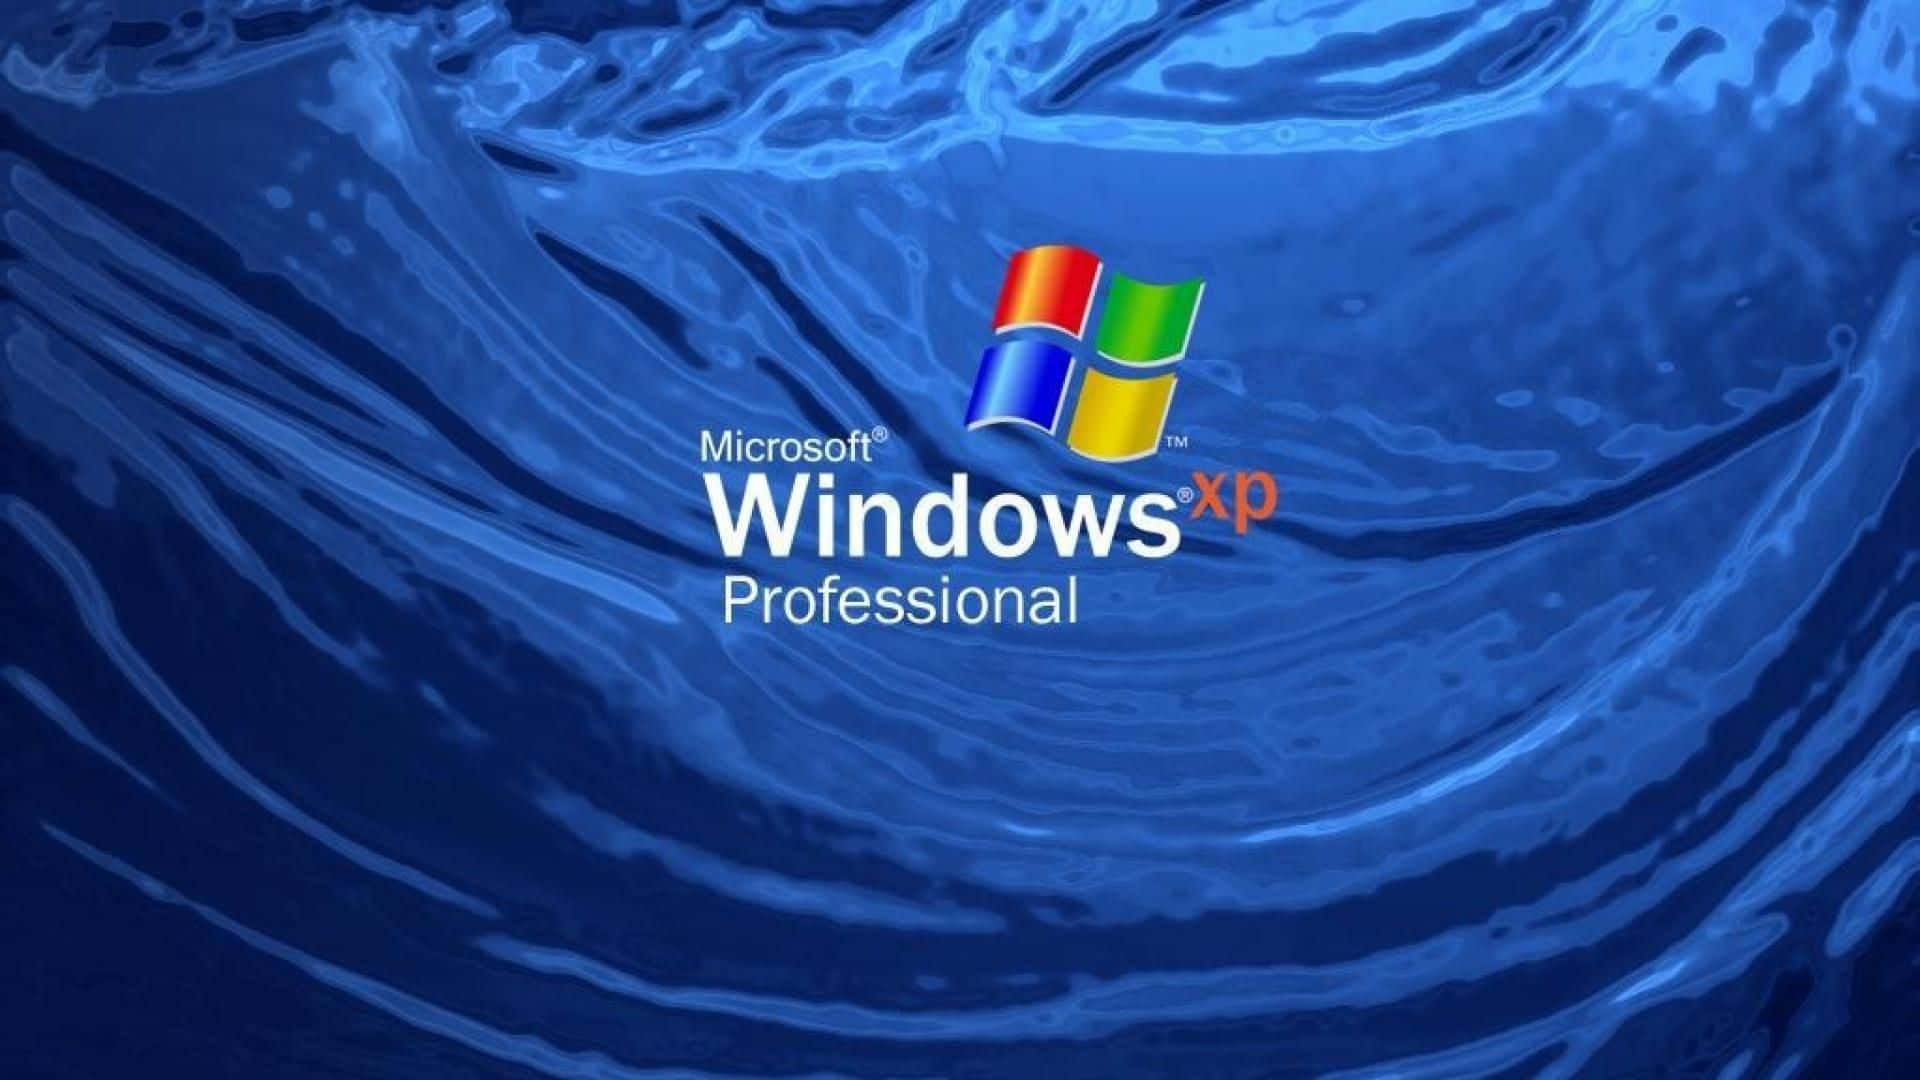 windows xp professional wallpaper blue